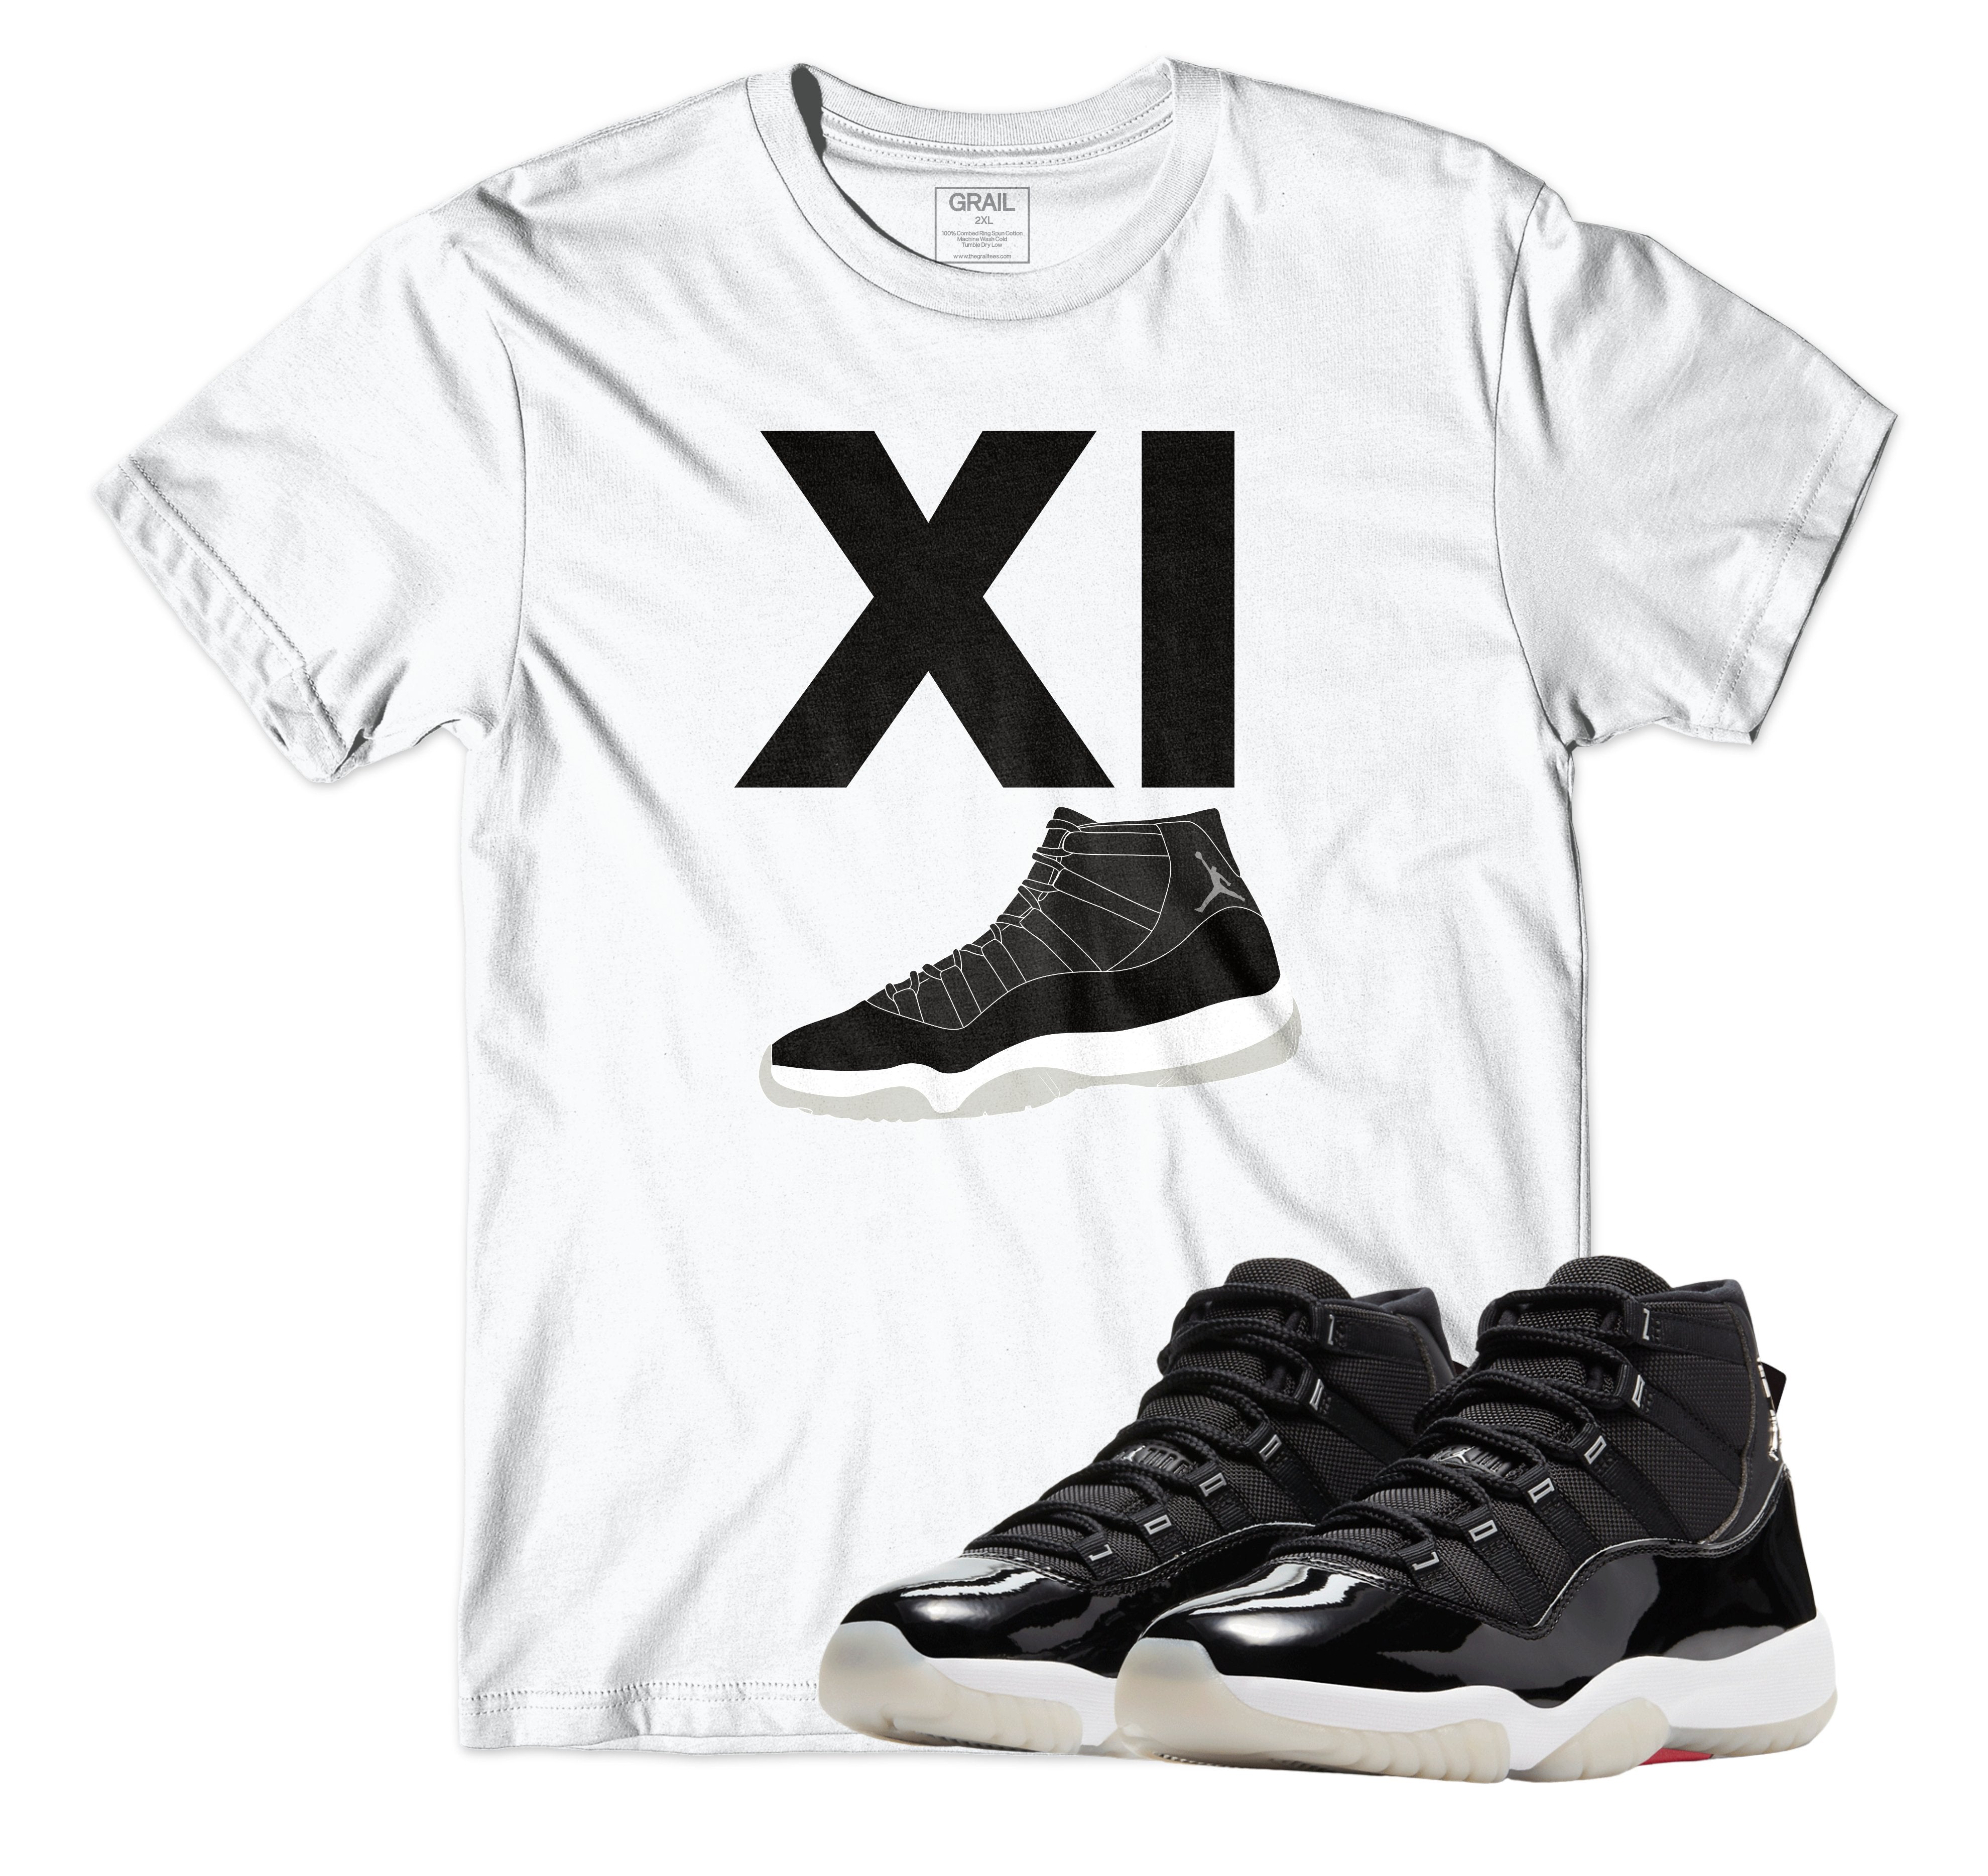 Air Jordan 11 Jubilee I Silhouette Tee | Air Jordan 11 | Sneaker Match | Jordan Matching Outfits